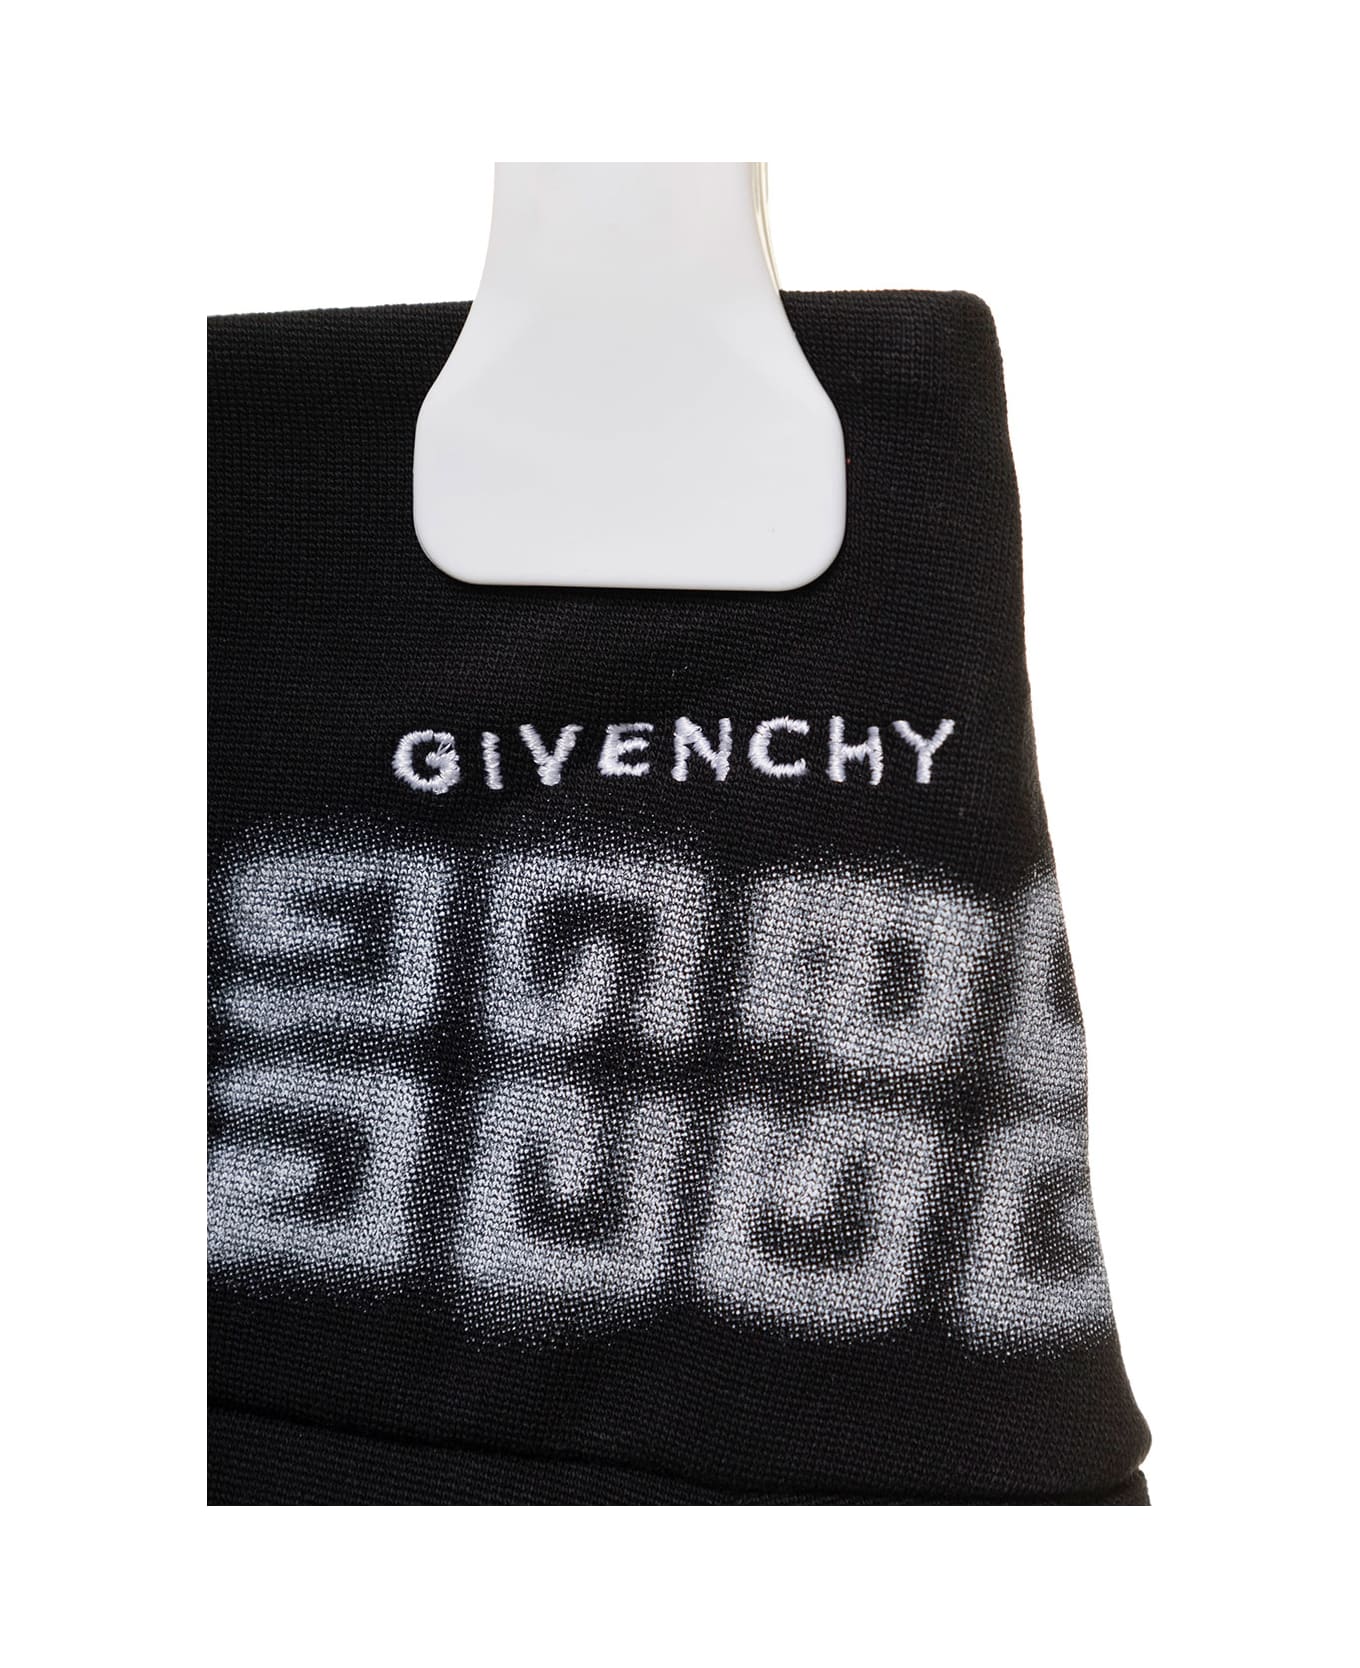 Givenchy Mini Givenchy Kids Girl's Black Flounced Skirt - Black